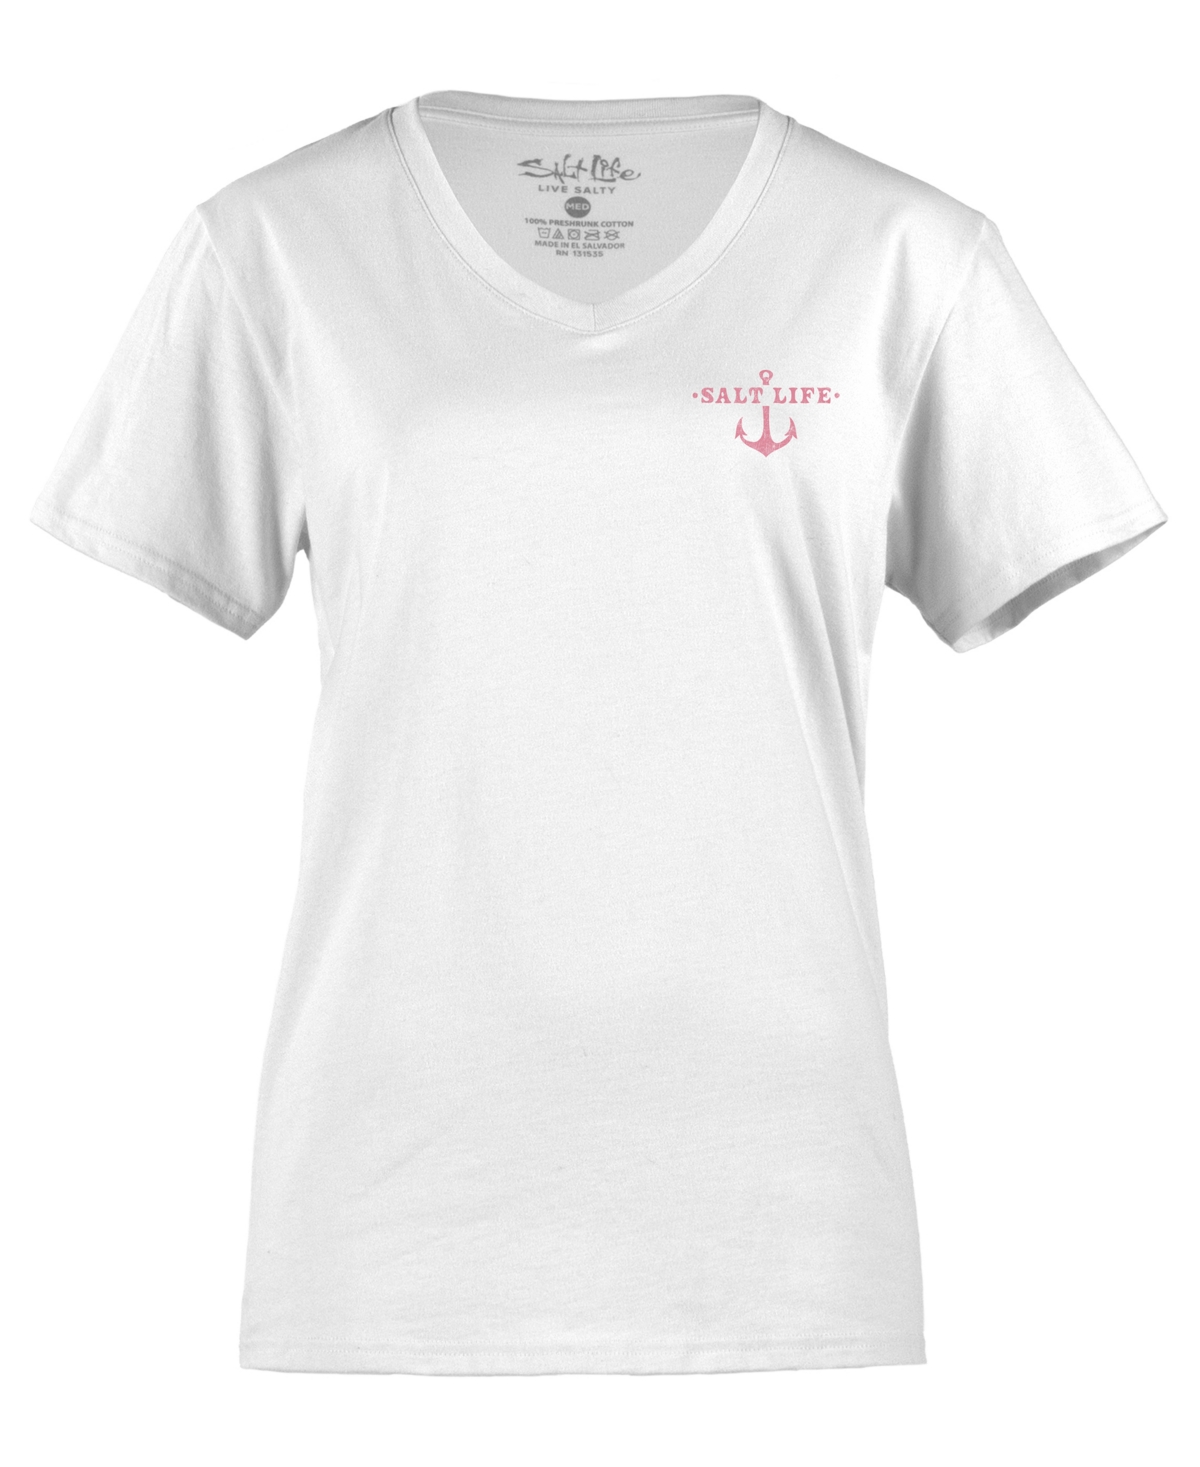 Women's Sea Yall Cotton Graphic V-Neck T-Shirt - White